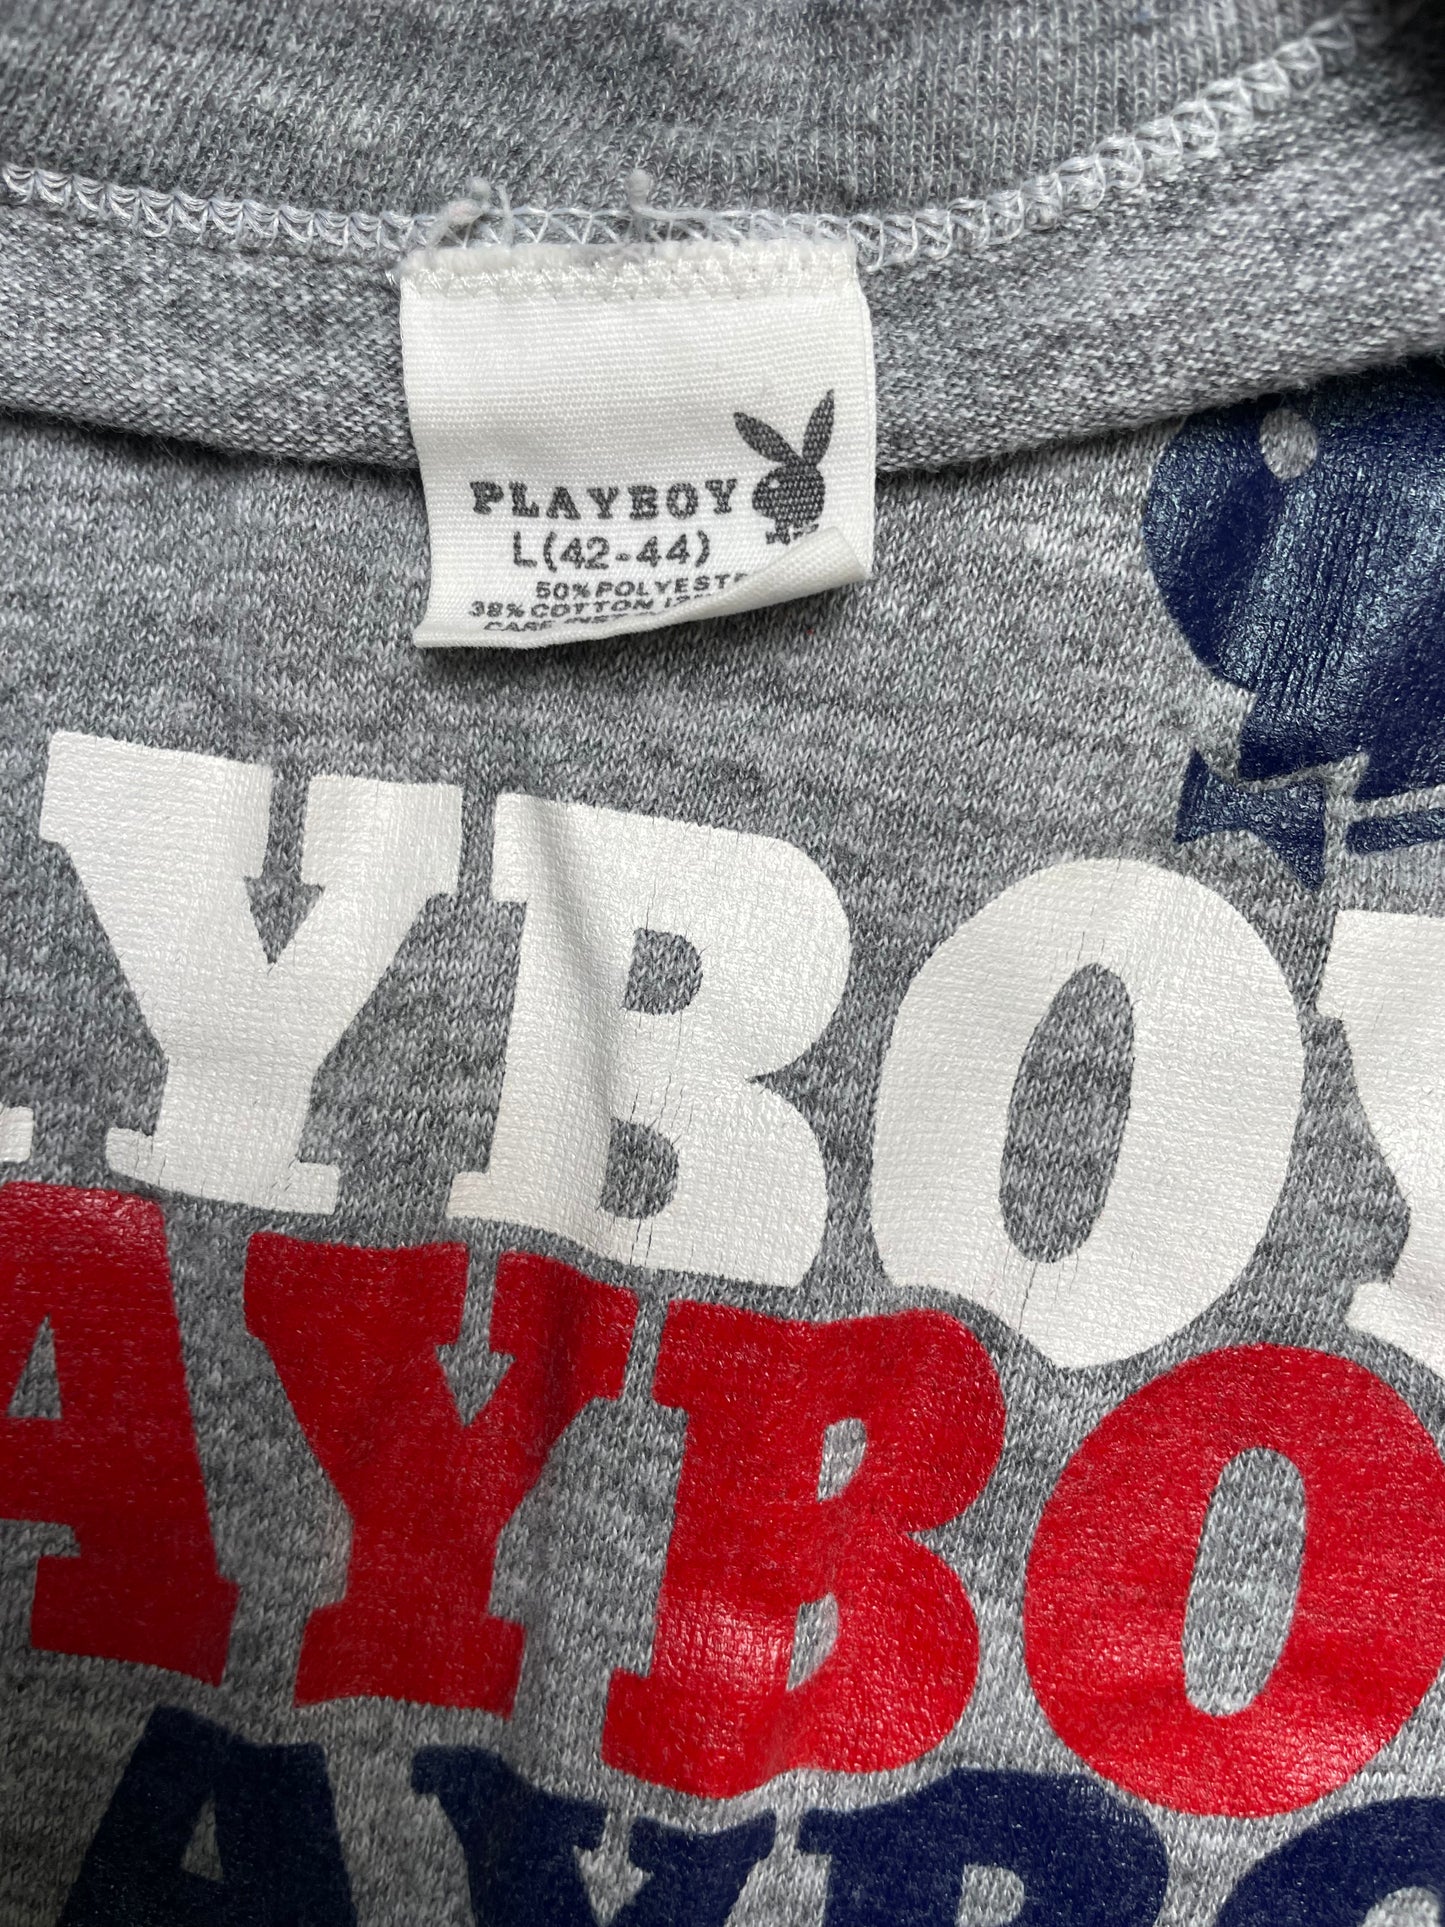 Vintage 70s Playboy x3 Graphic TShirt Large